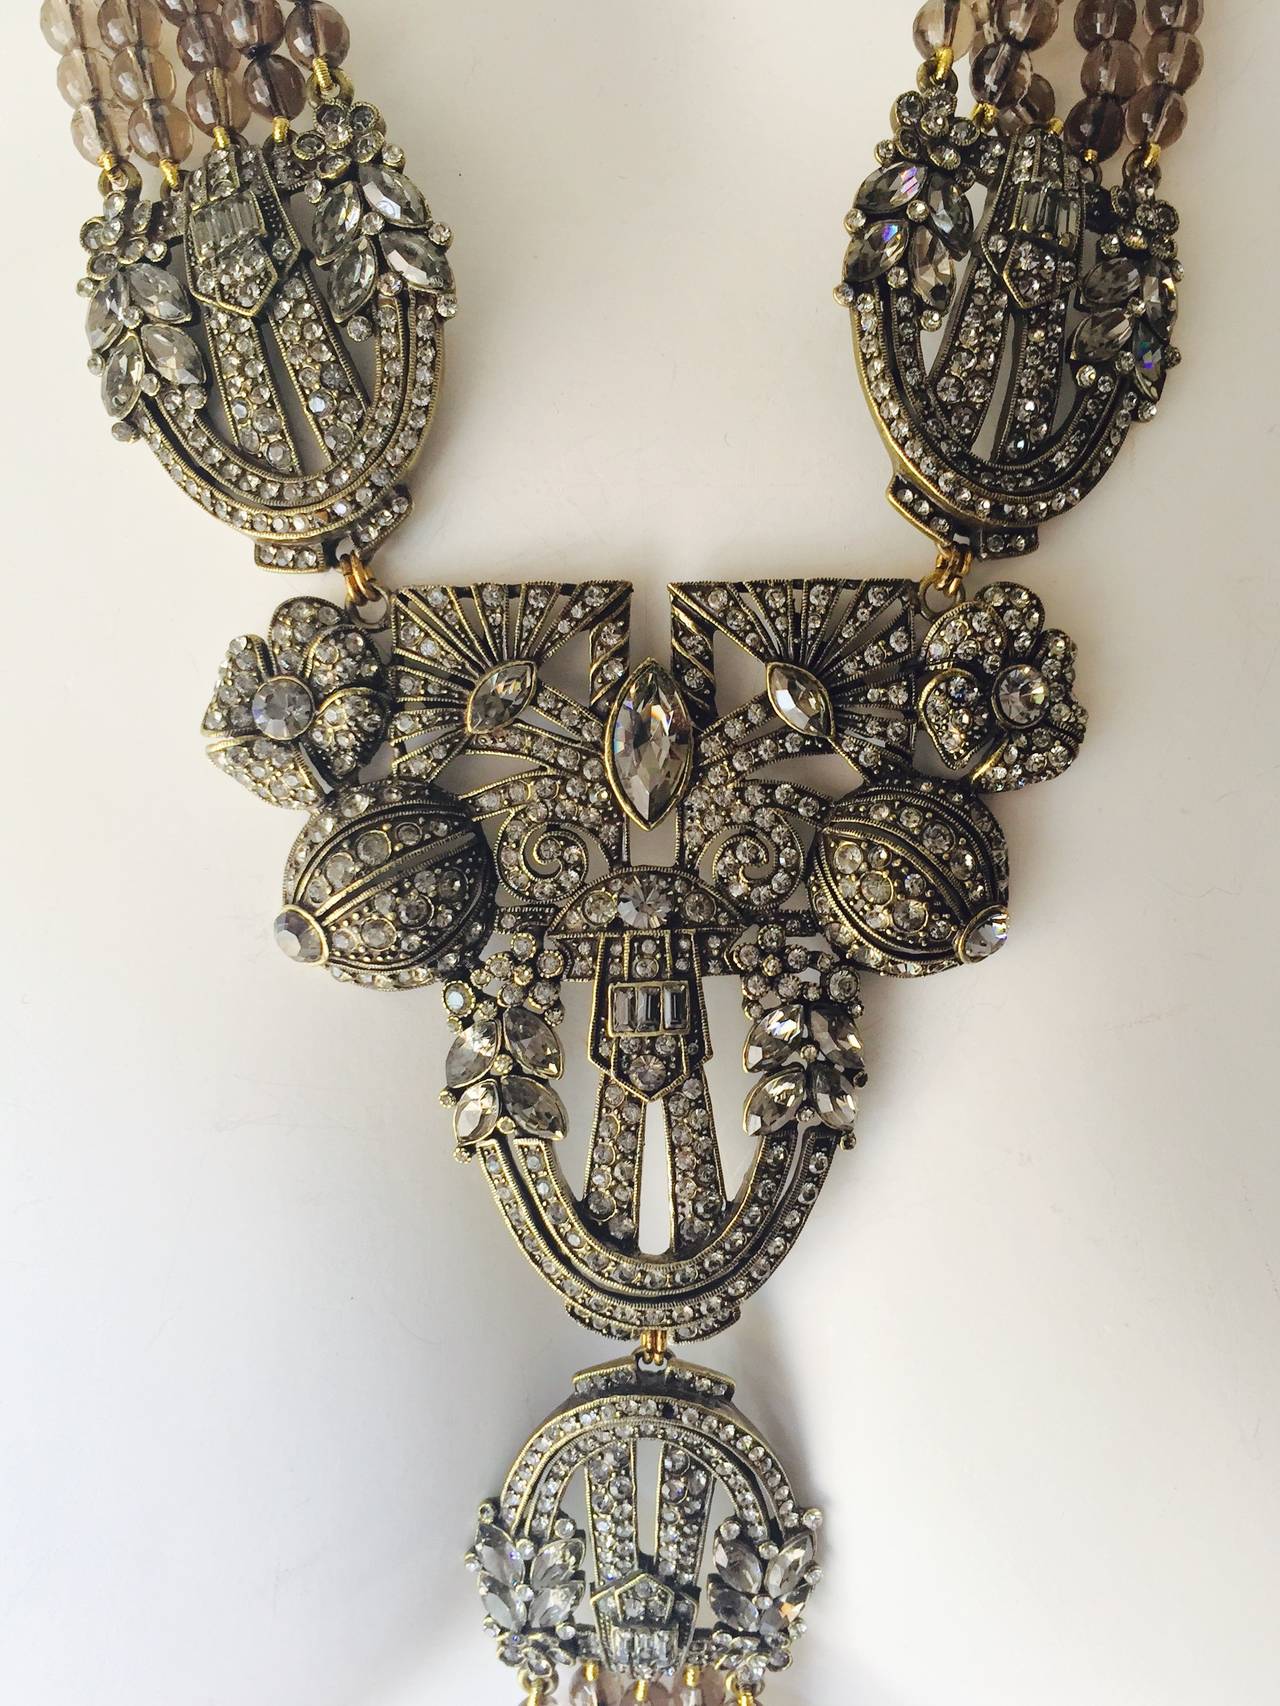 Ornate Heidi Daus Estate Necklace evokes Hollywood's 